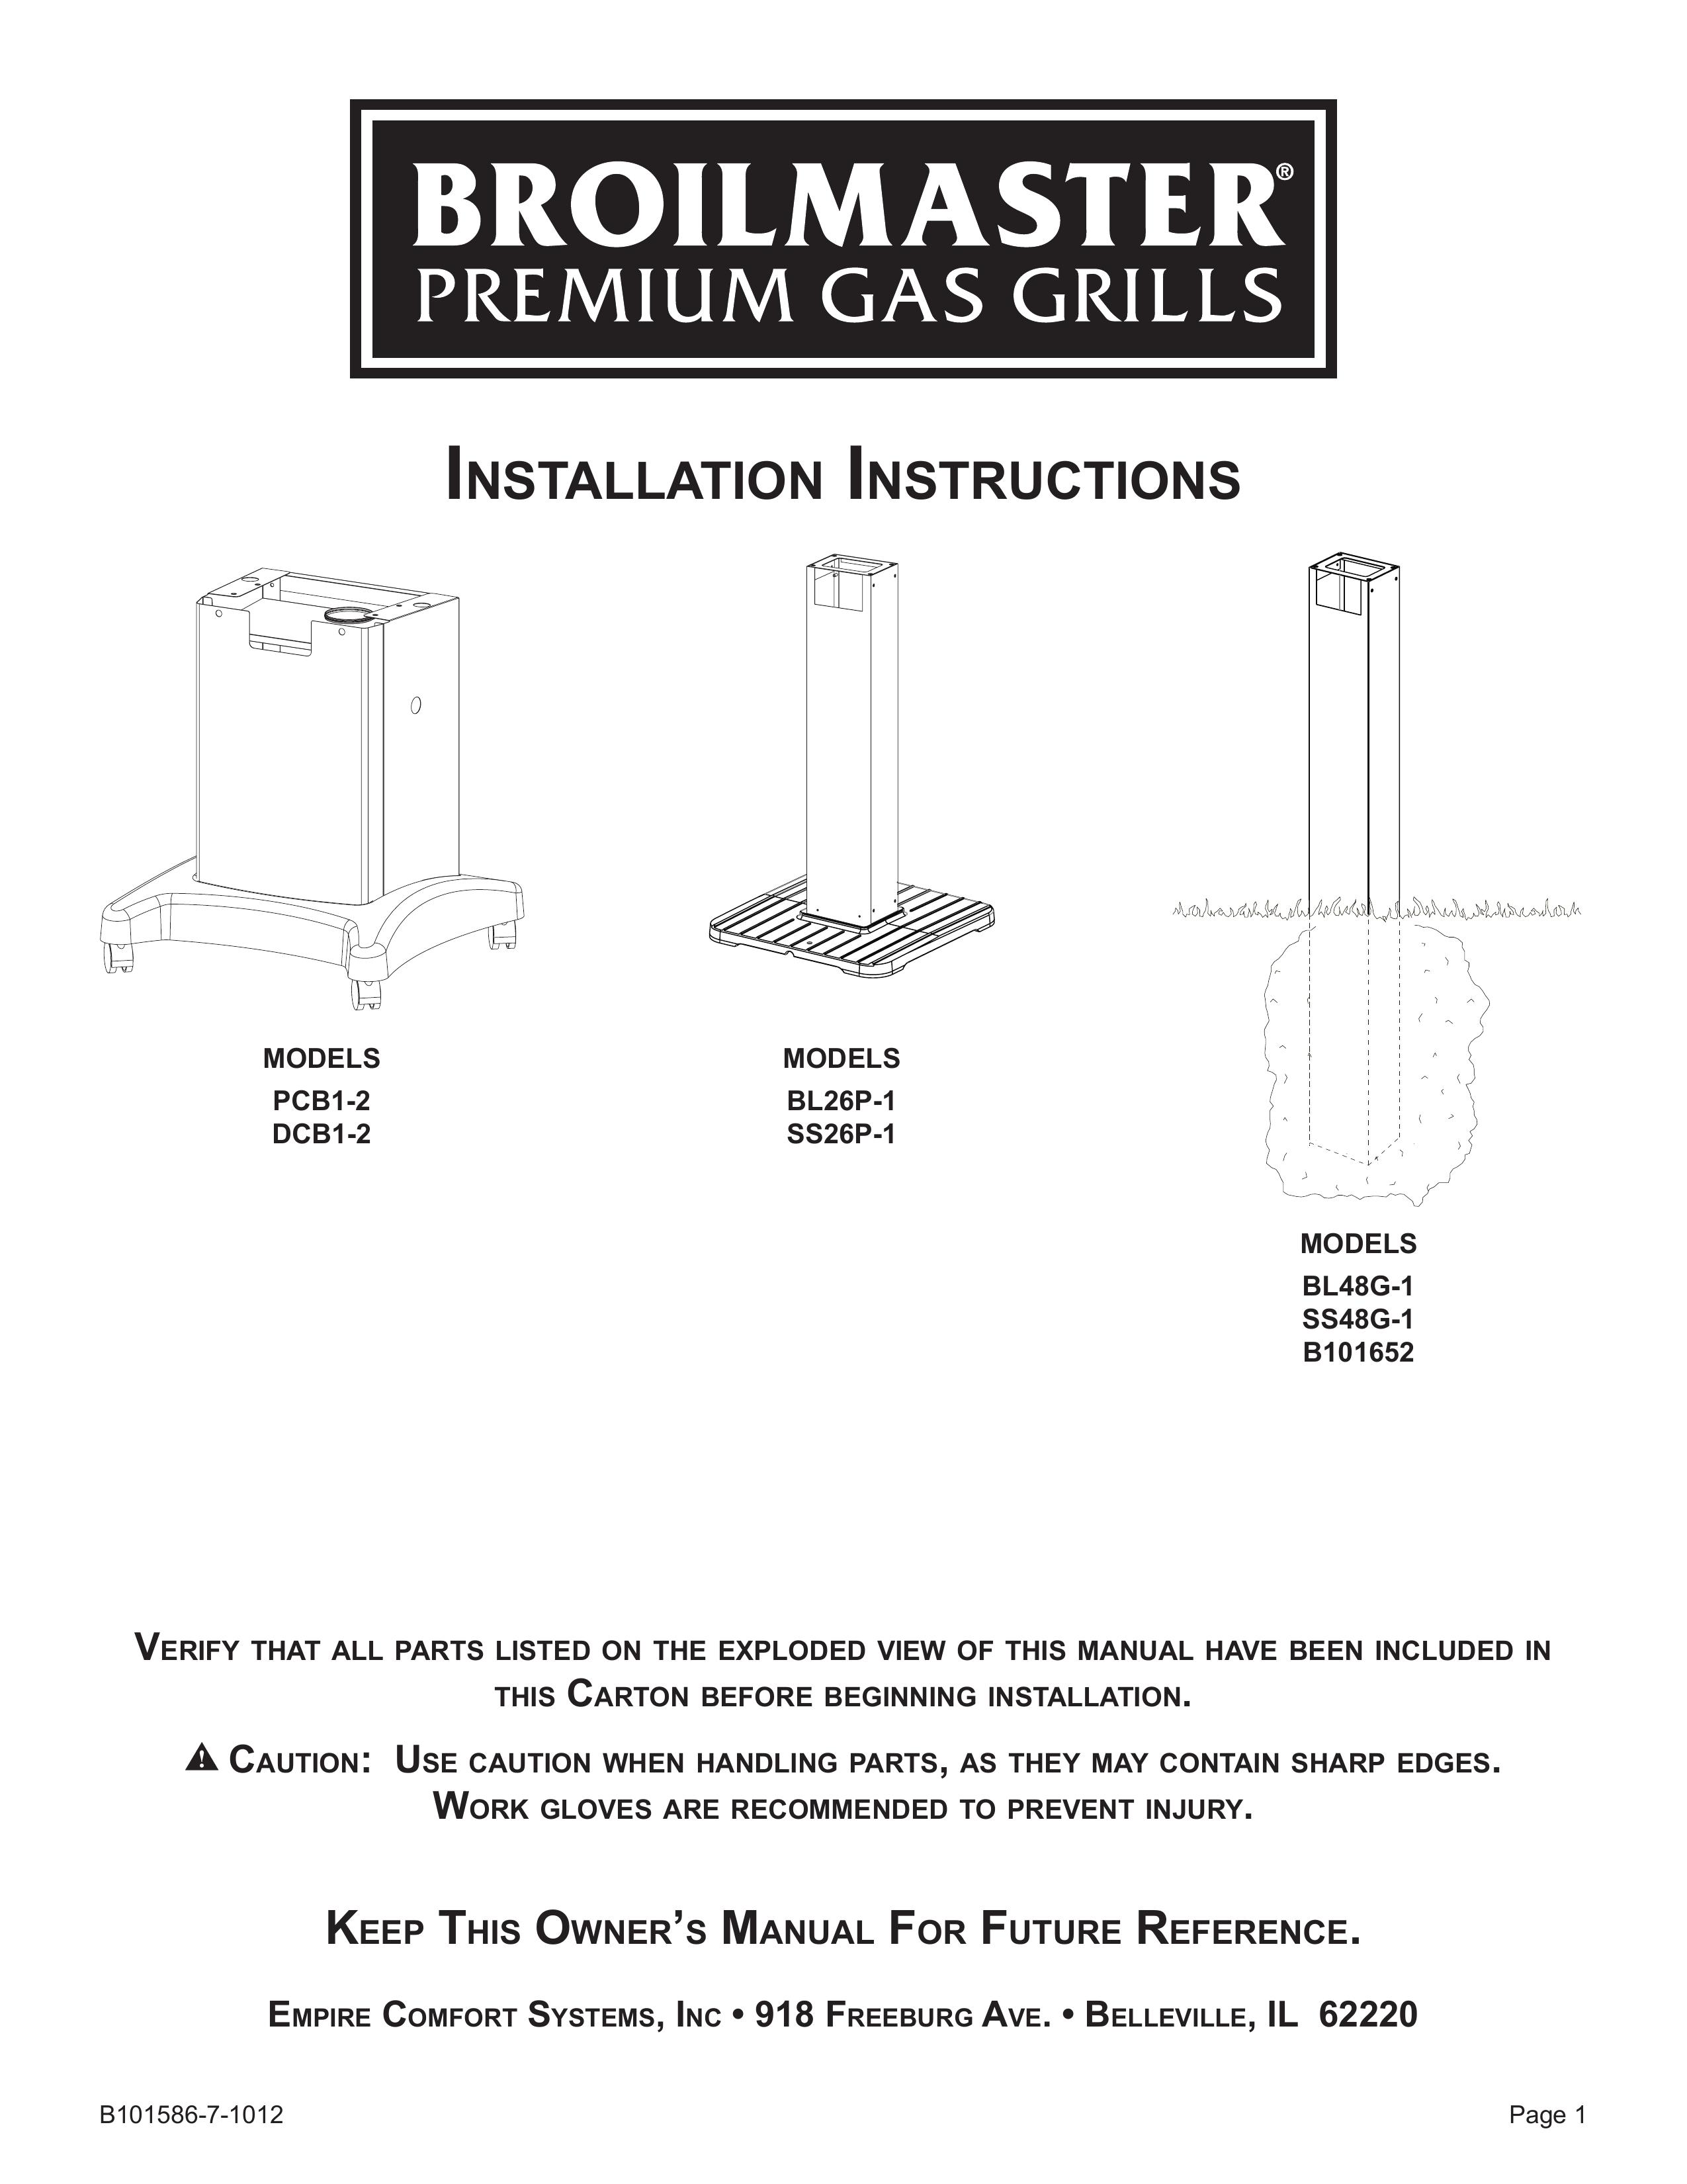 Broilmaster B101652 Gas Grill User Manual